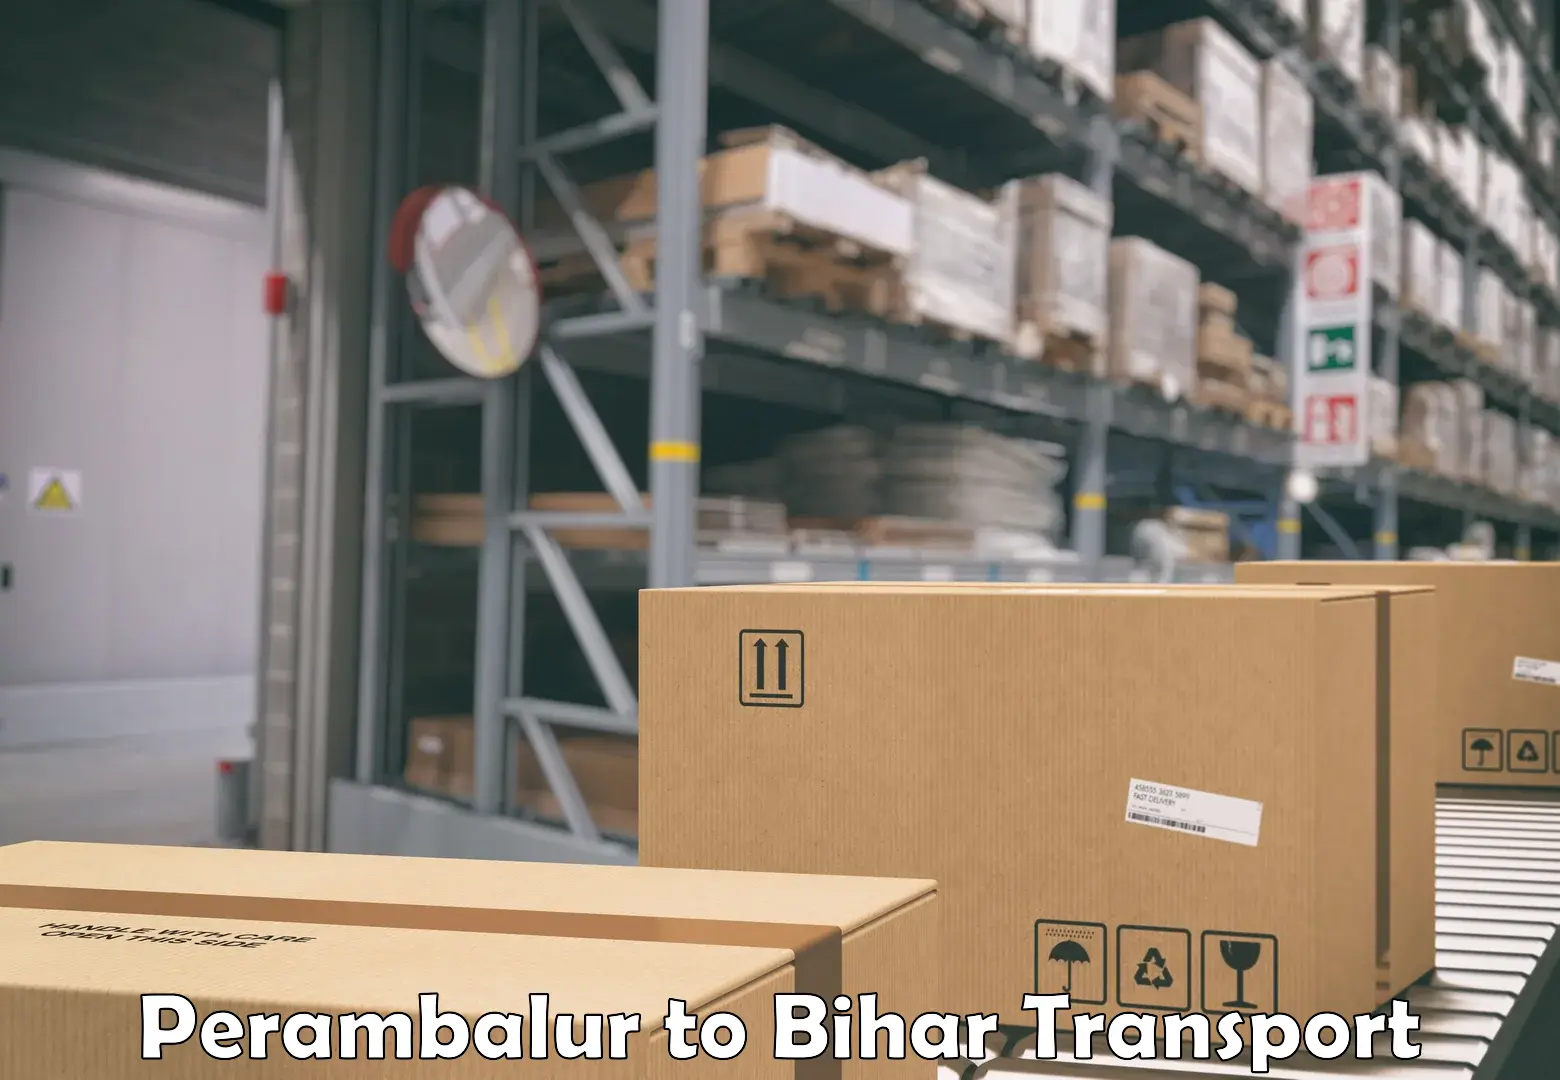 Transport in sharing Perambalur to Biraul